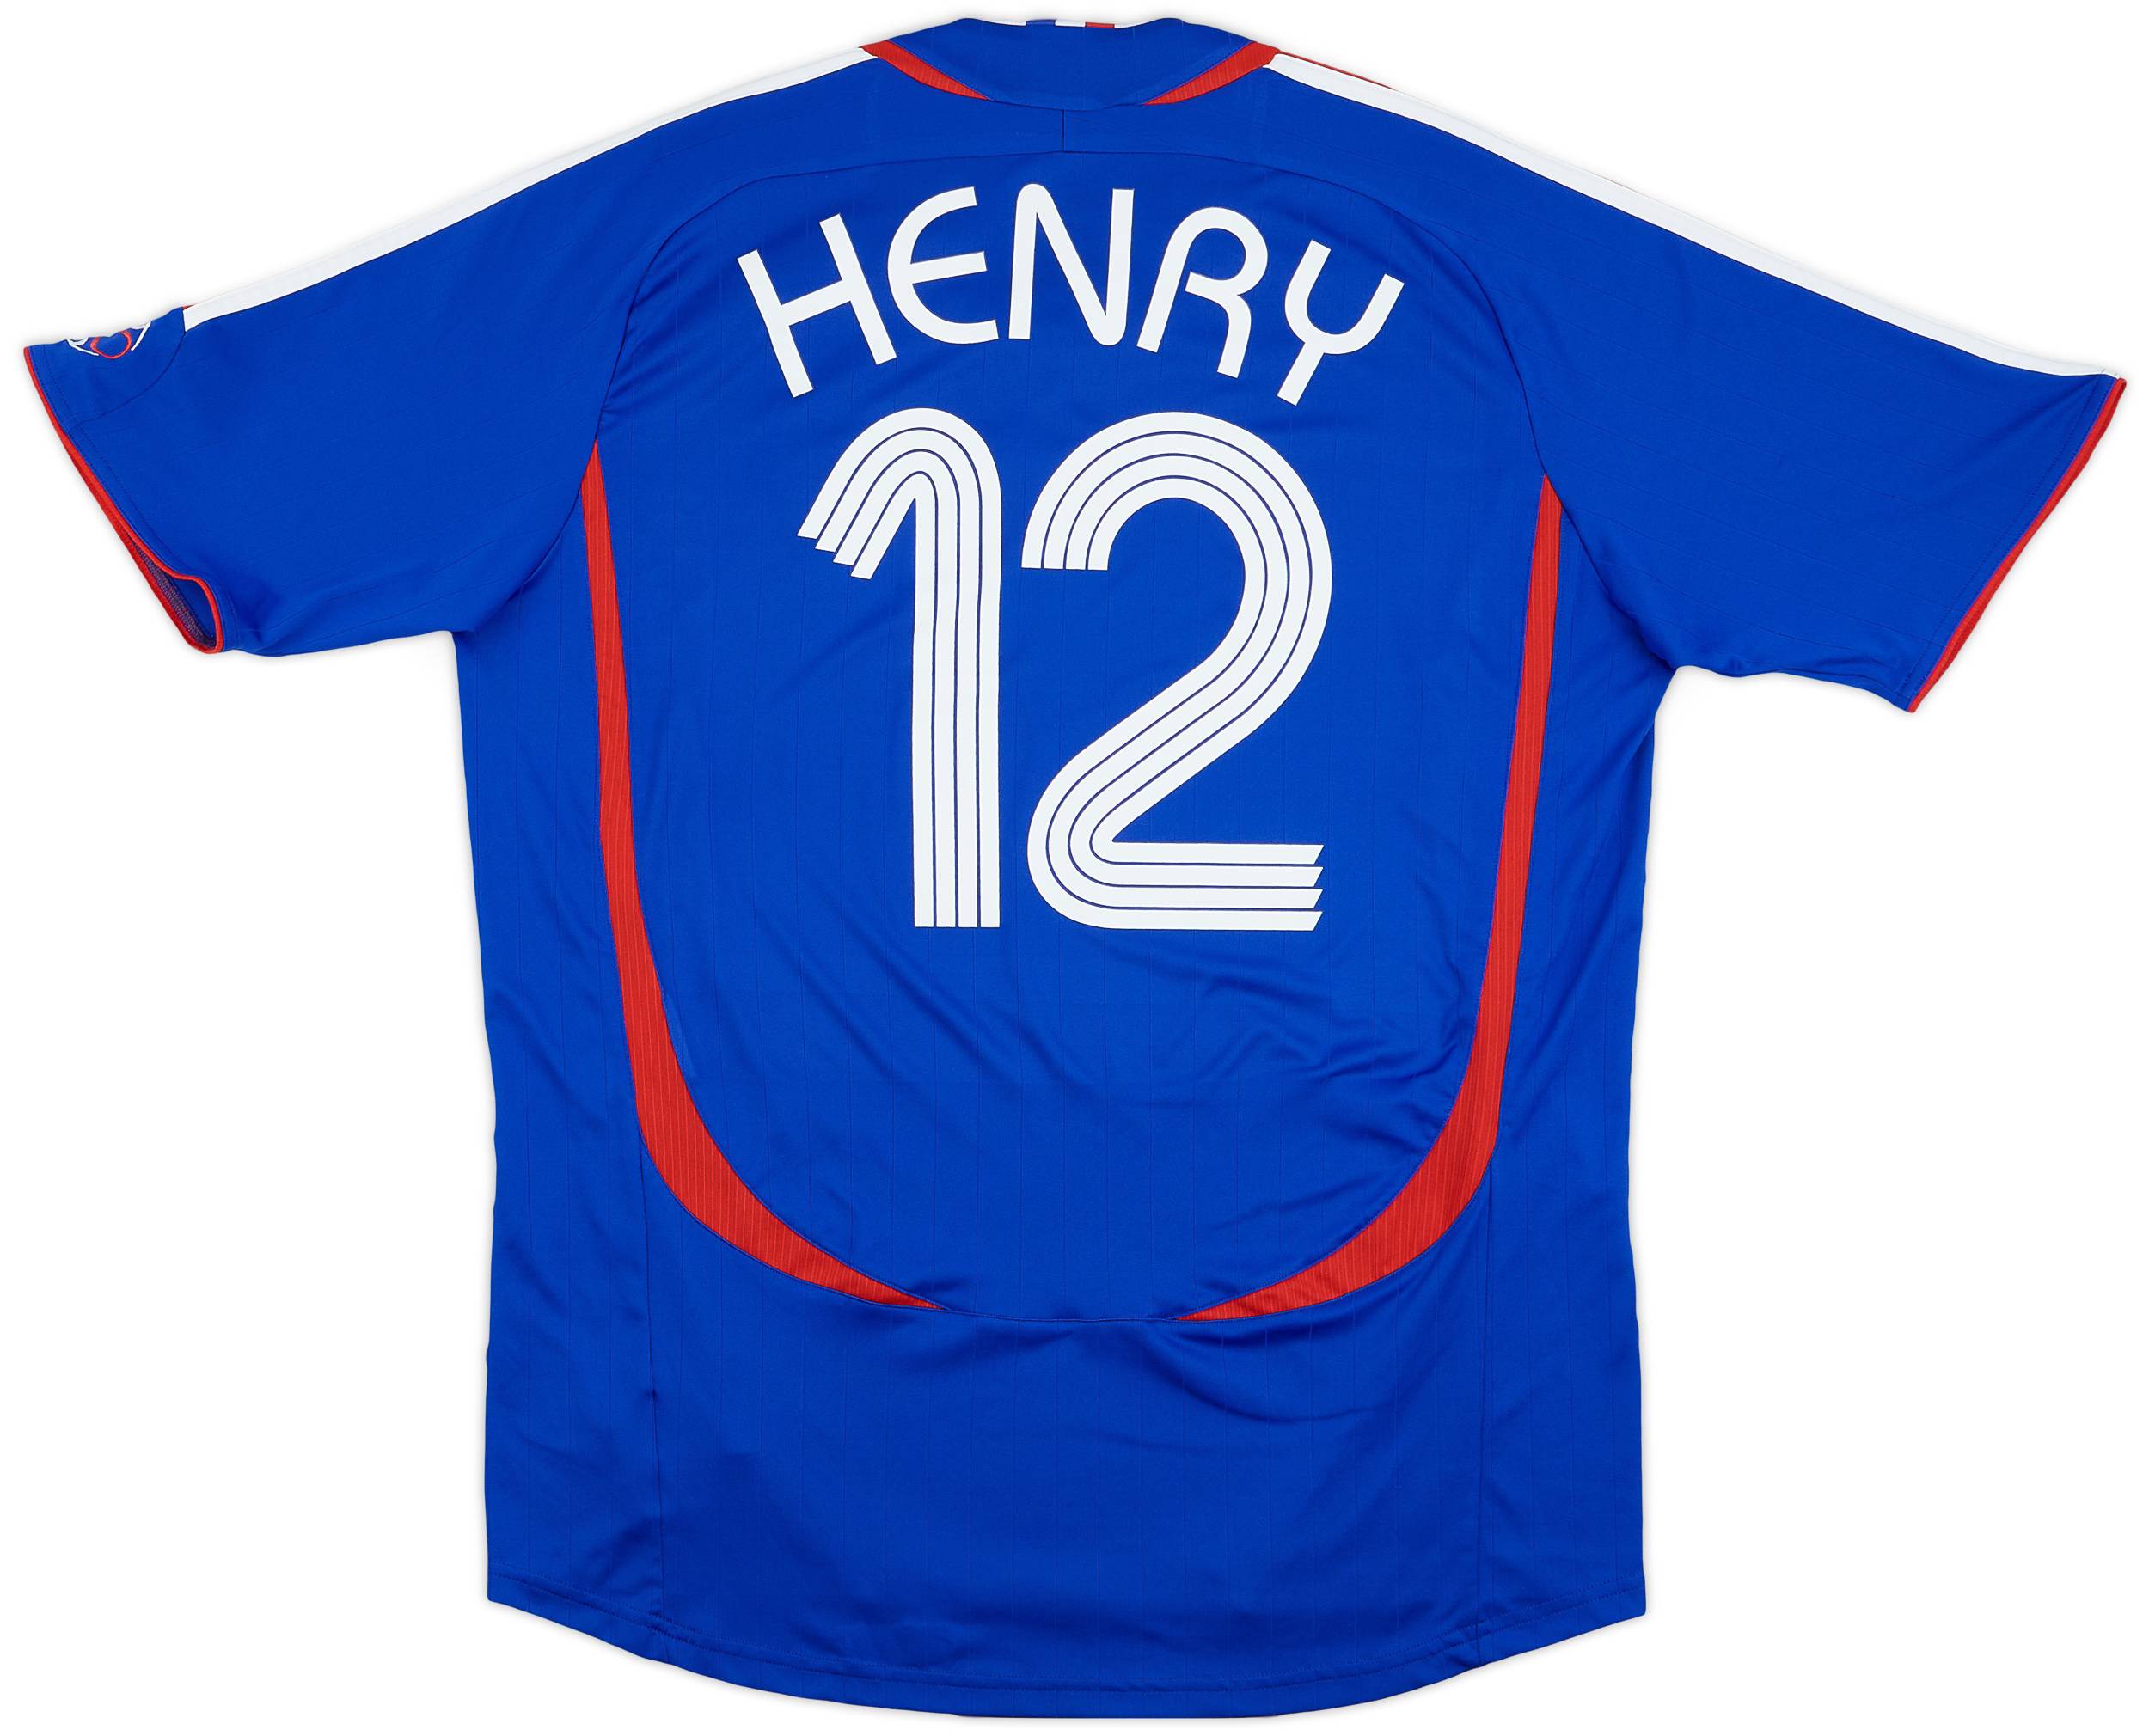 2006-07 France Home Shirt Henry #12 - 9/10 - (L)